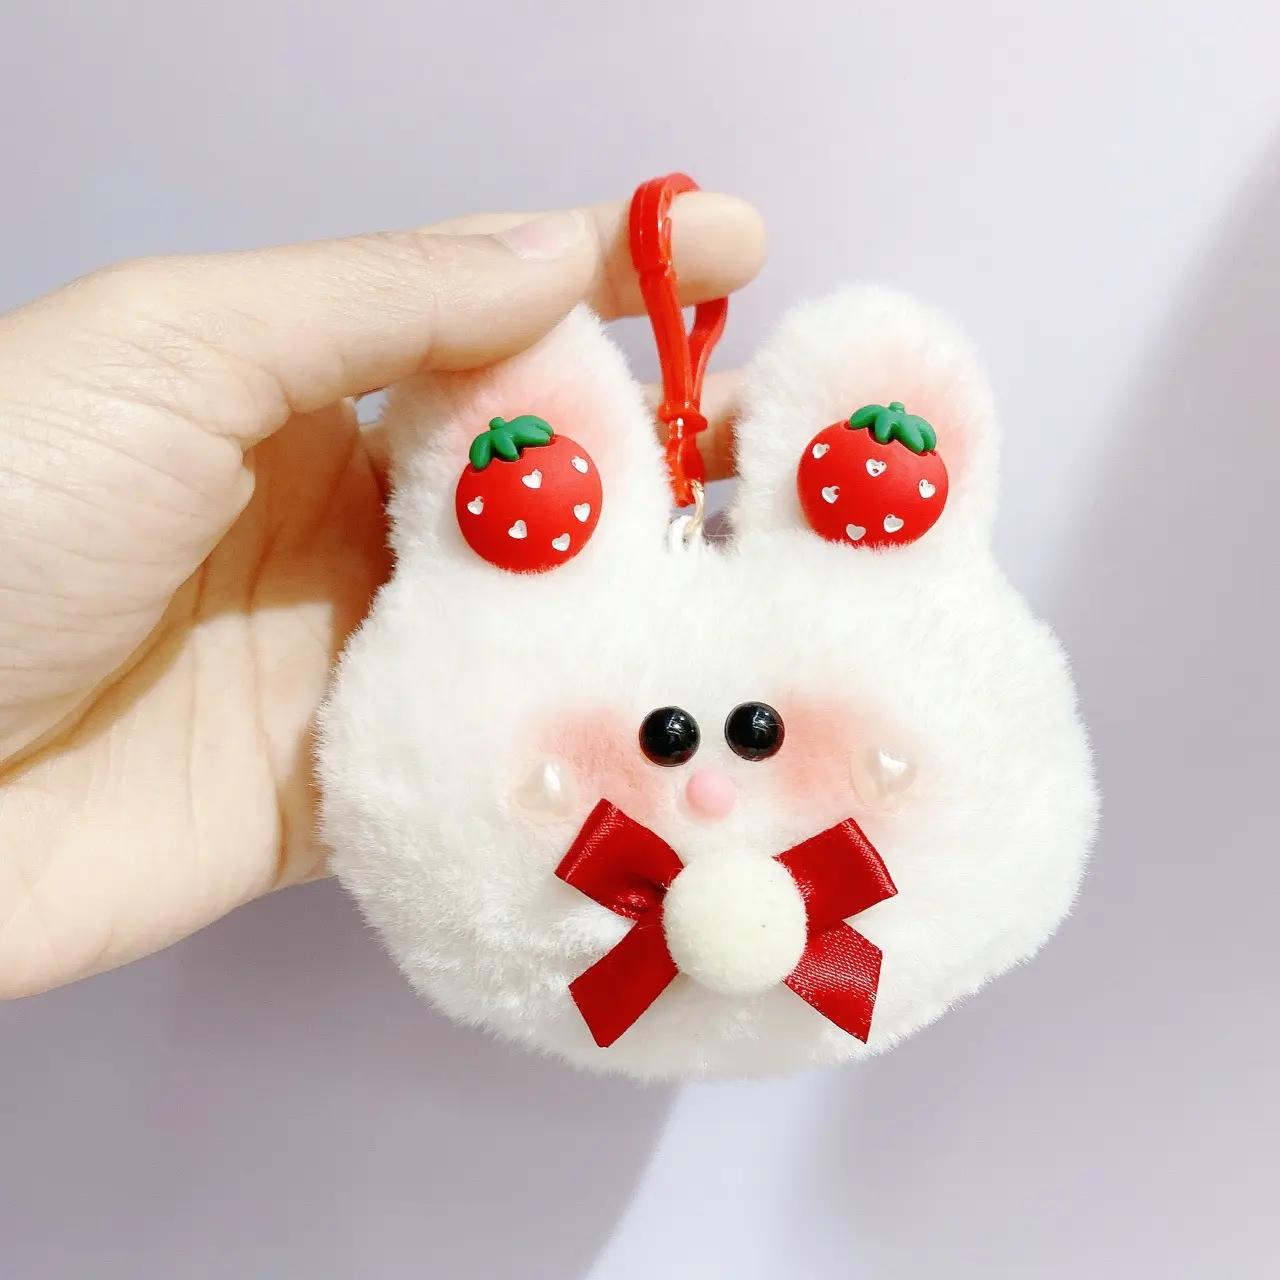 4 "Alta Qualidade Personalizado OEM Promocional Soft Mini Stuffed Animal boneca Mni cartoon chaveiro apple teddy bear de pelúcia Keychain Toy